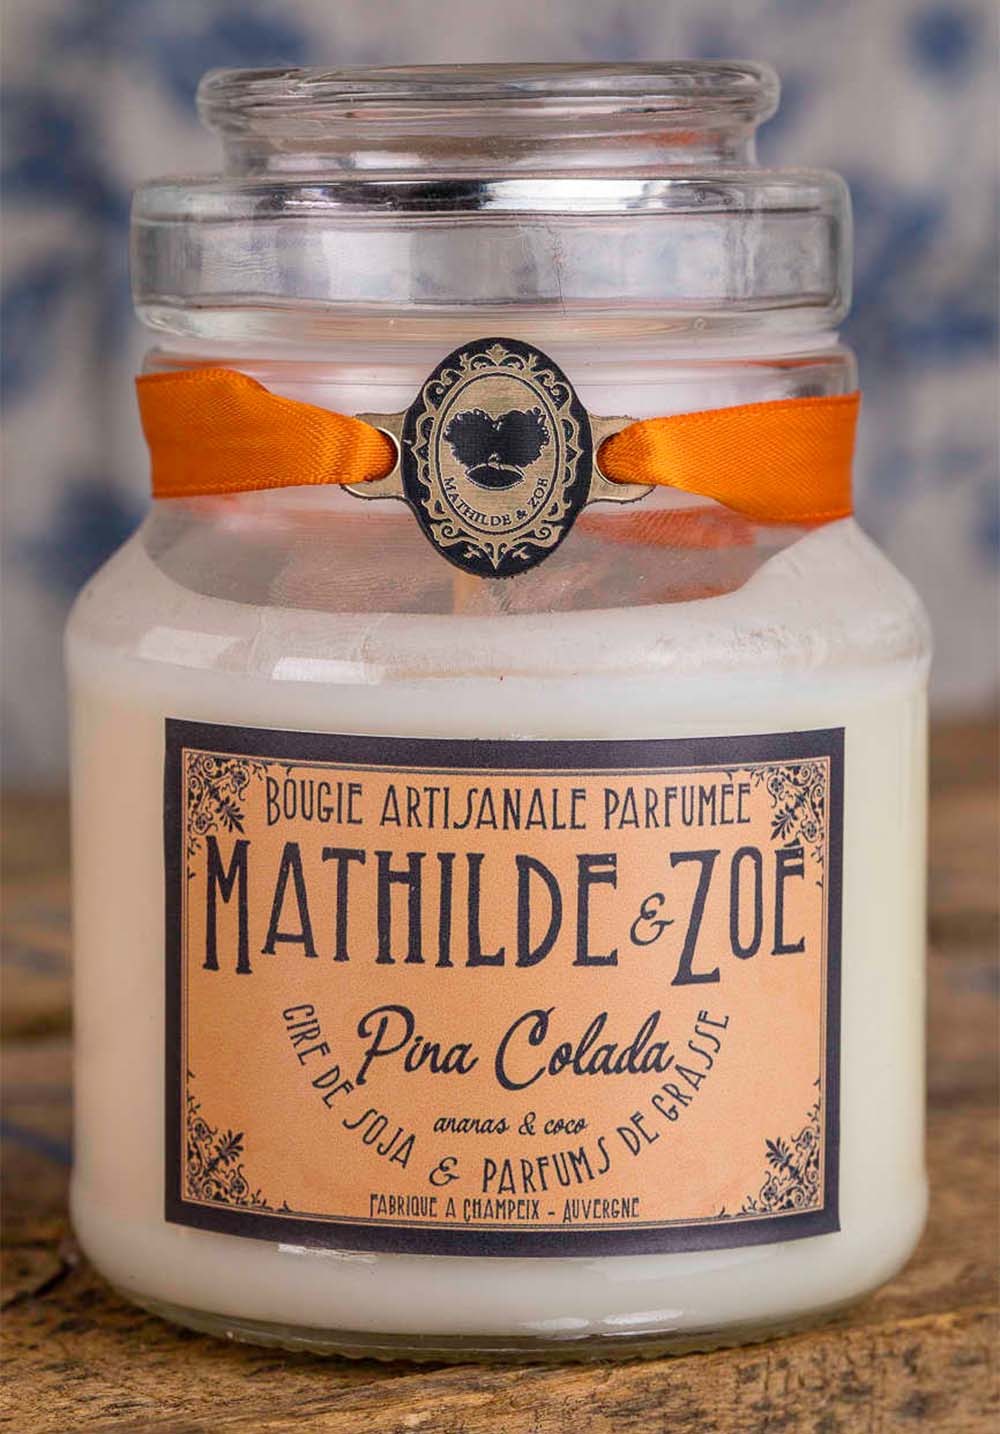 Bougie artisanale parfumée Mathilde et Zoé - Pina Colada